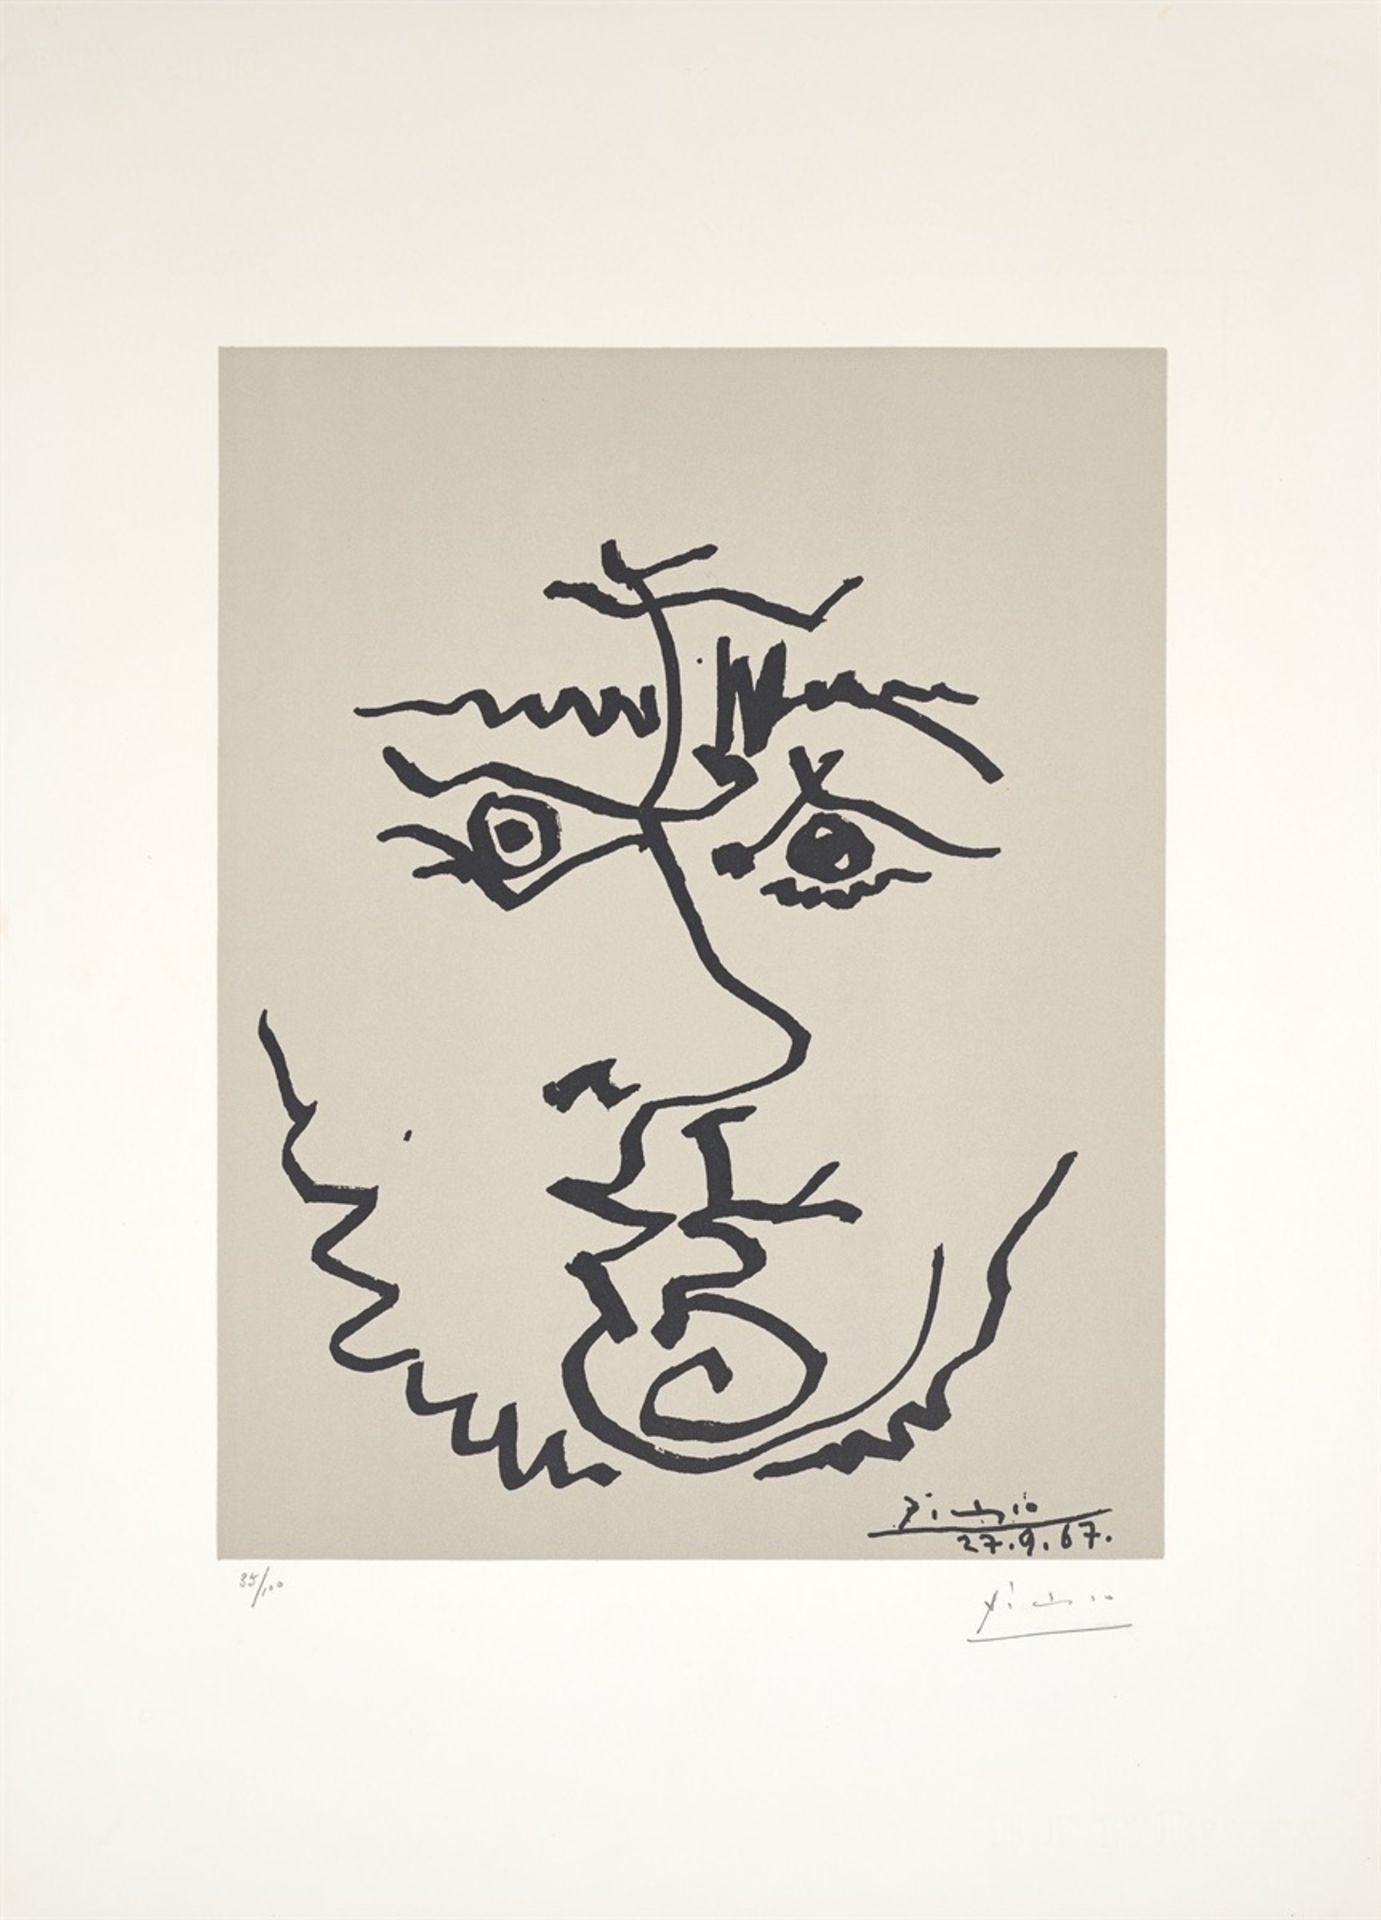 Nach Pablo Picasso. Visages. 1967